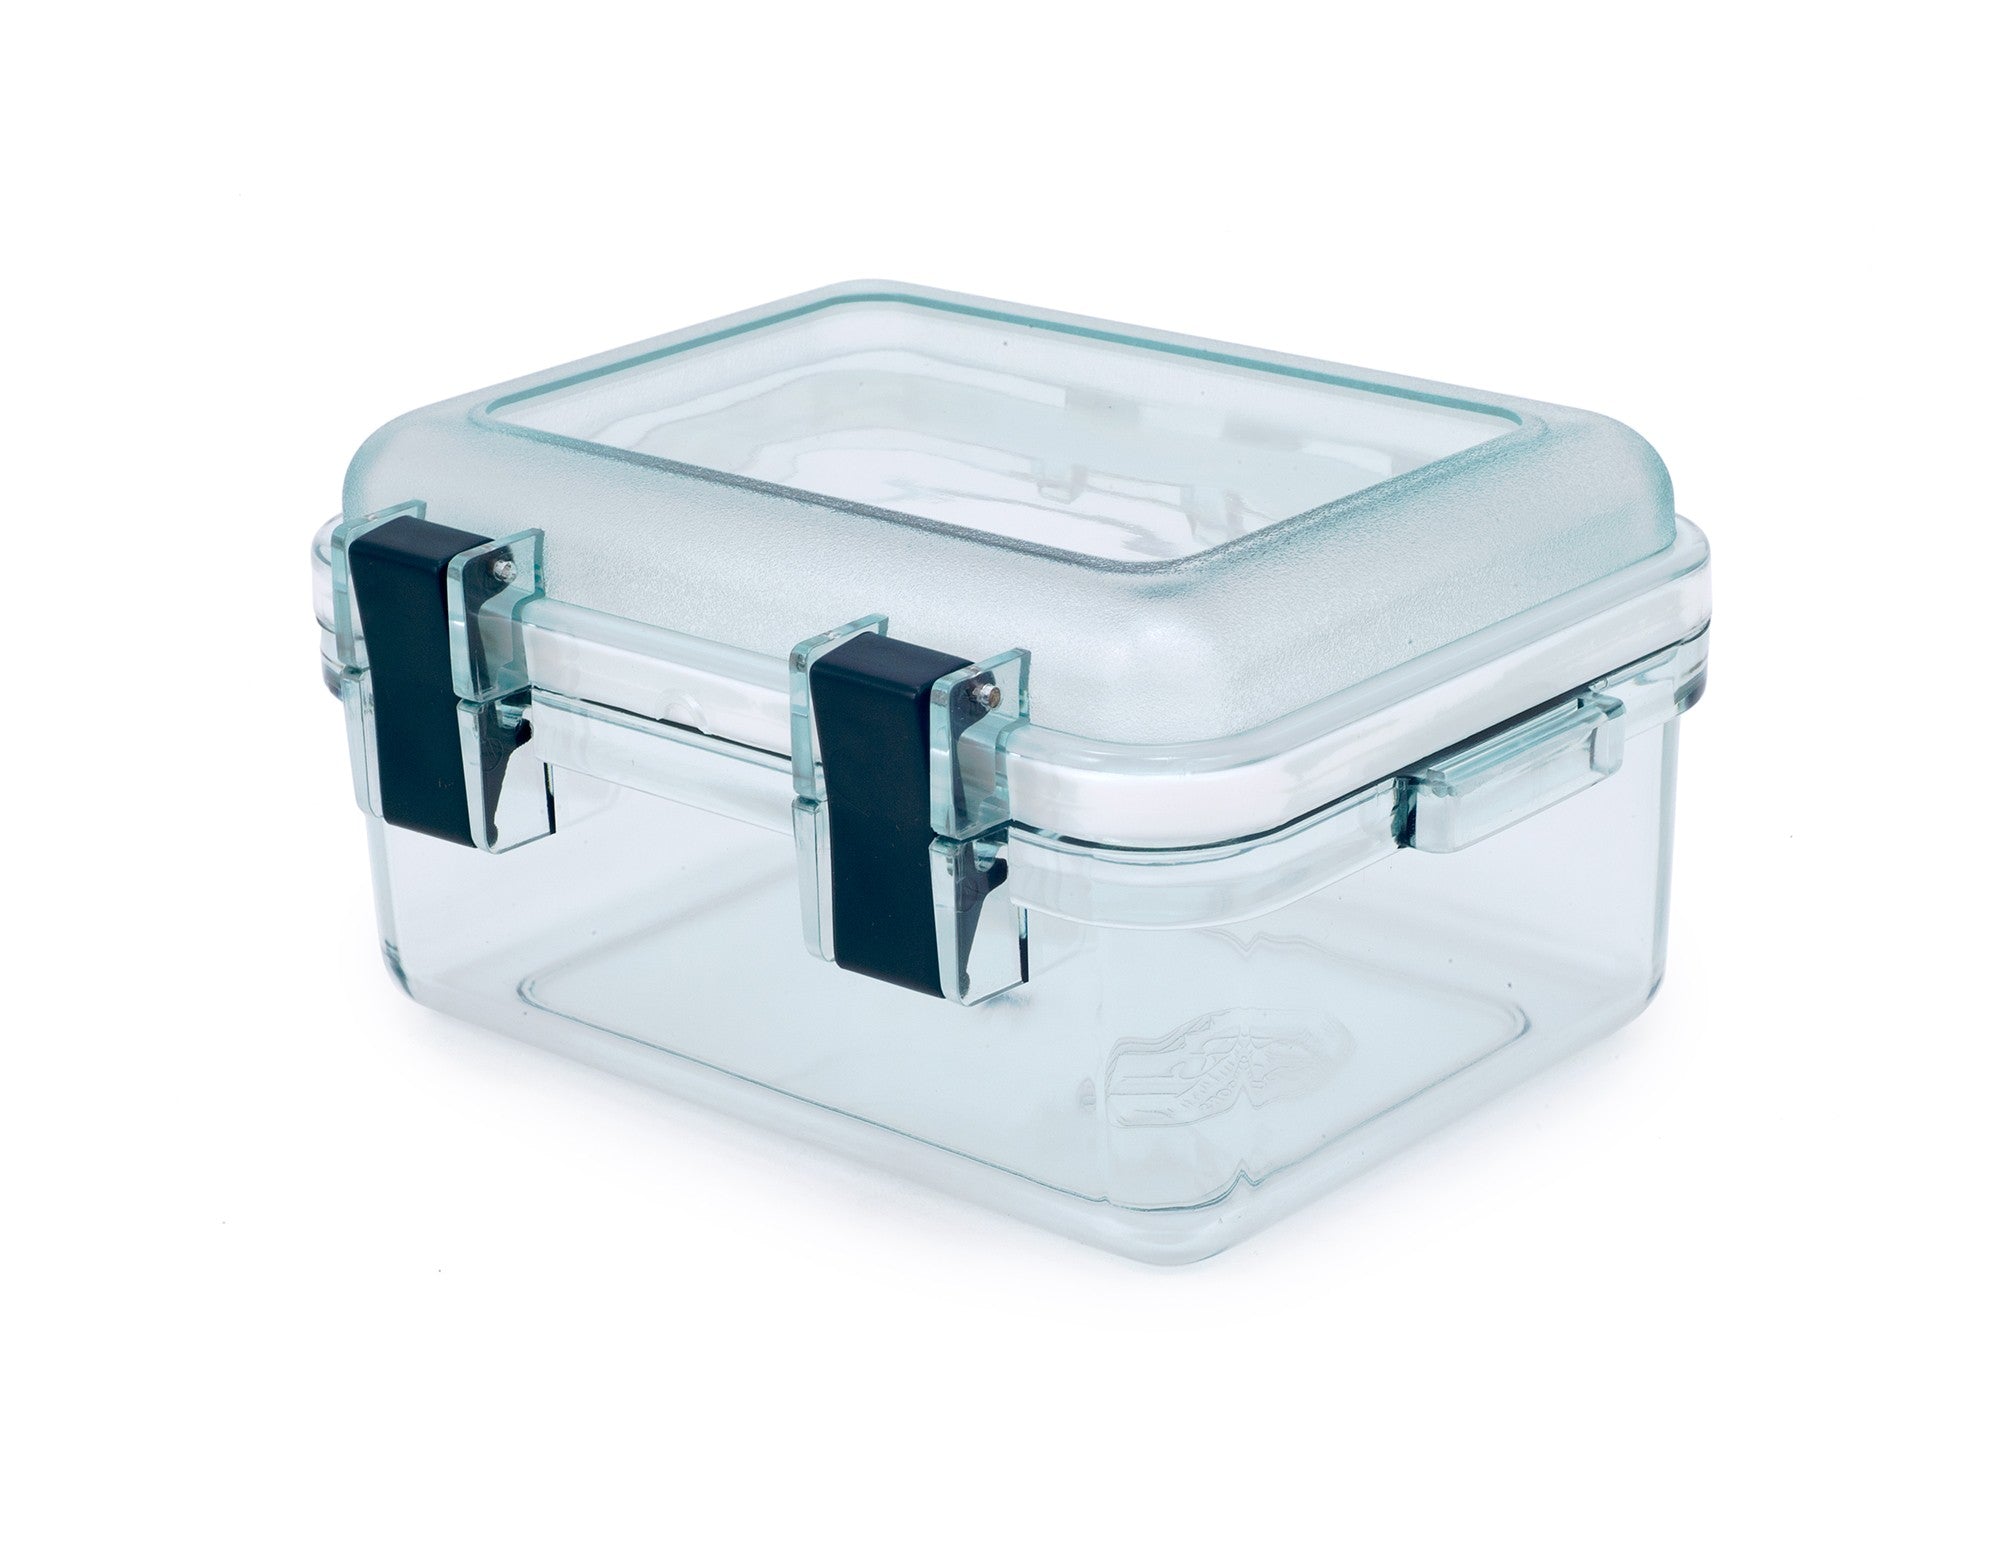 Lexan S Waterproof Gear Box for Dry Storage